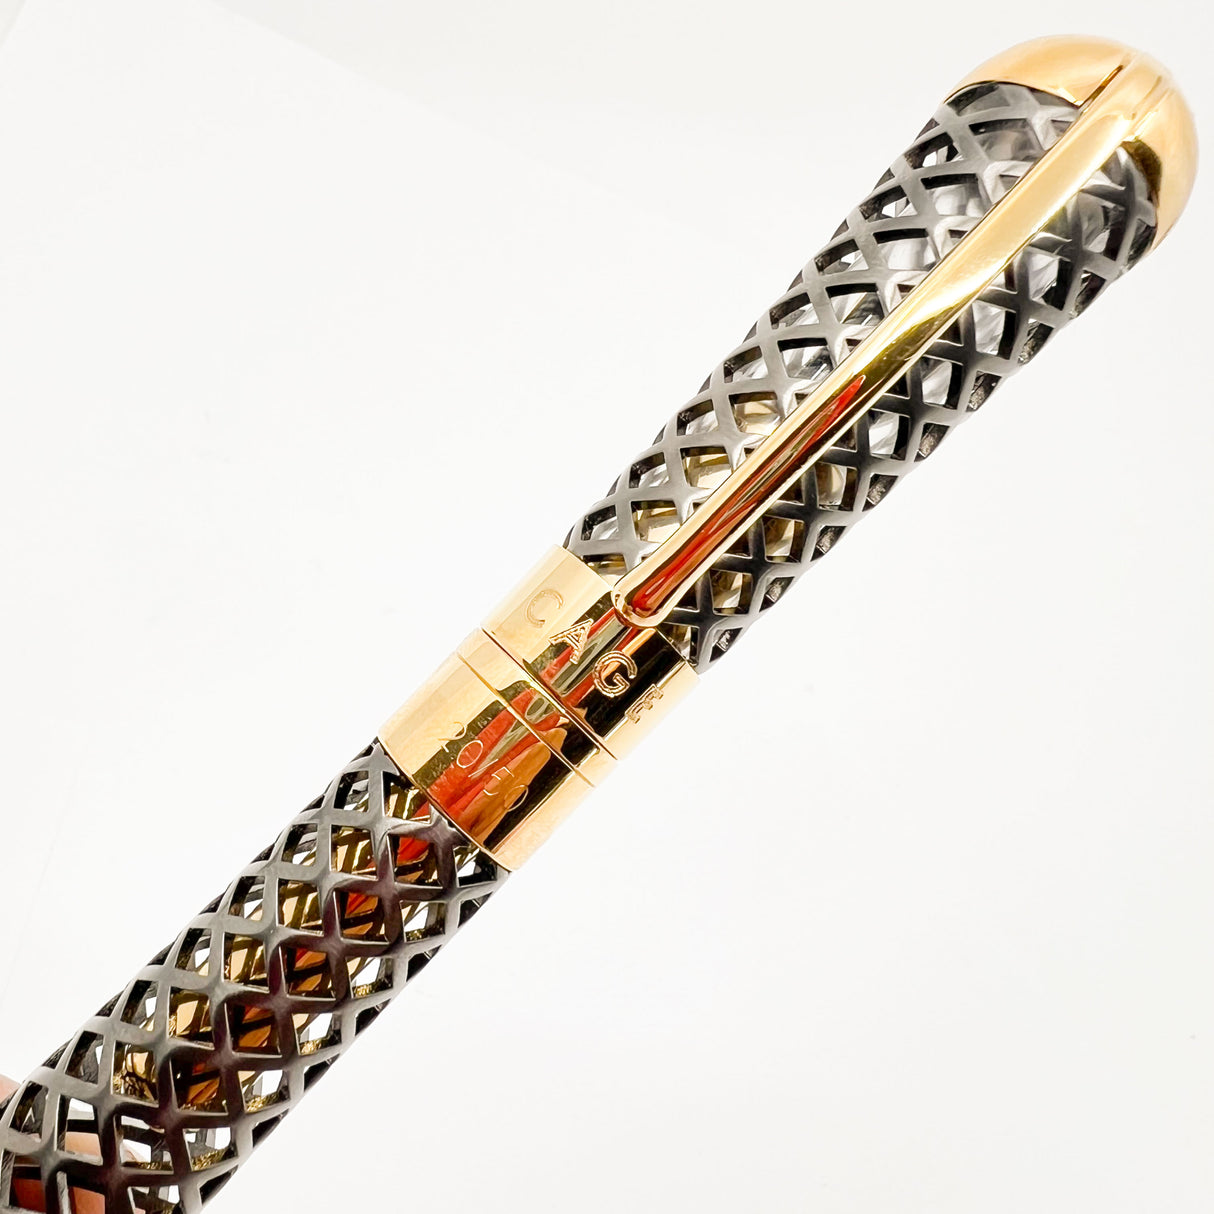 Visconti Black Diamond Cage LE Fountain Pen by Marta Sansoni - Only 50 Pens Produced!